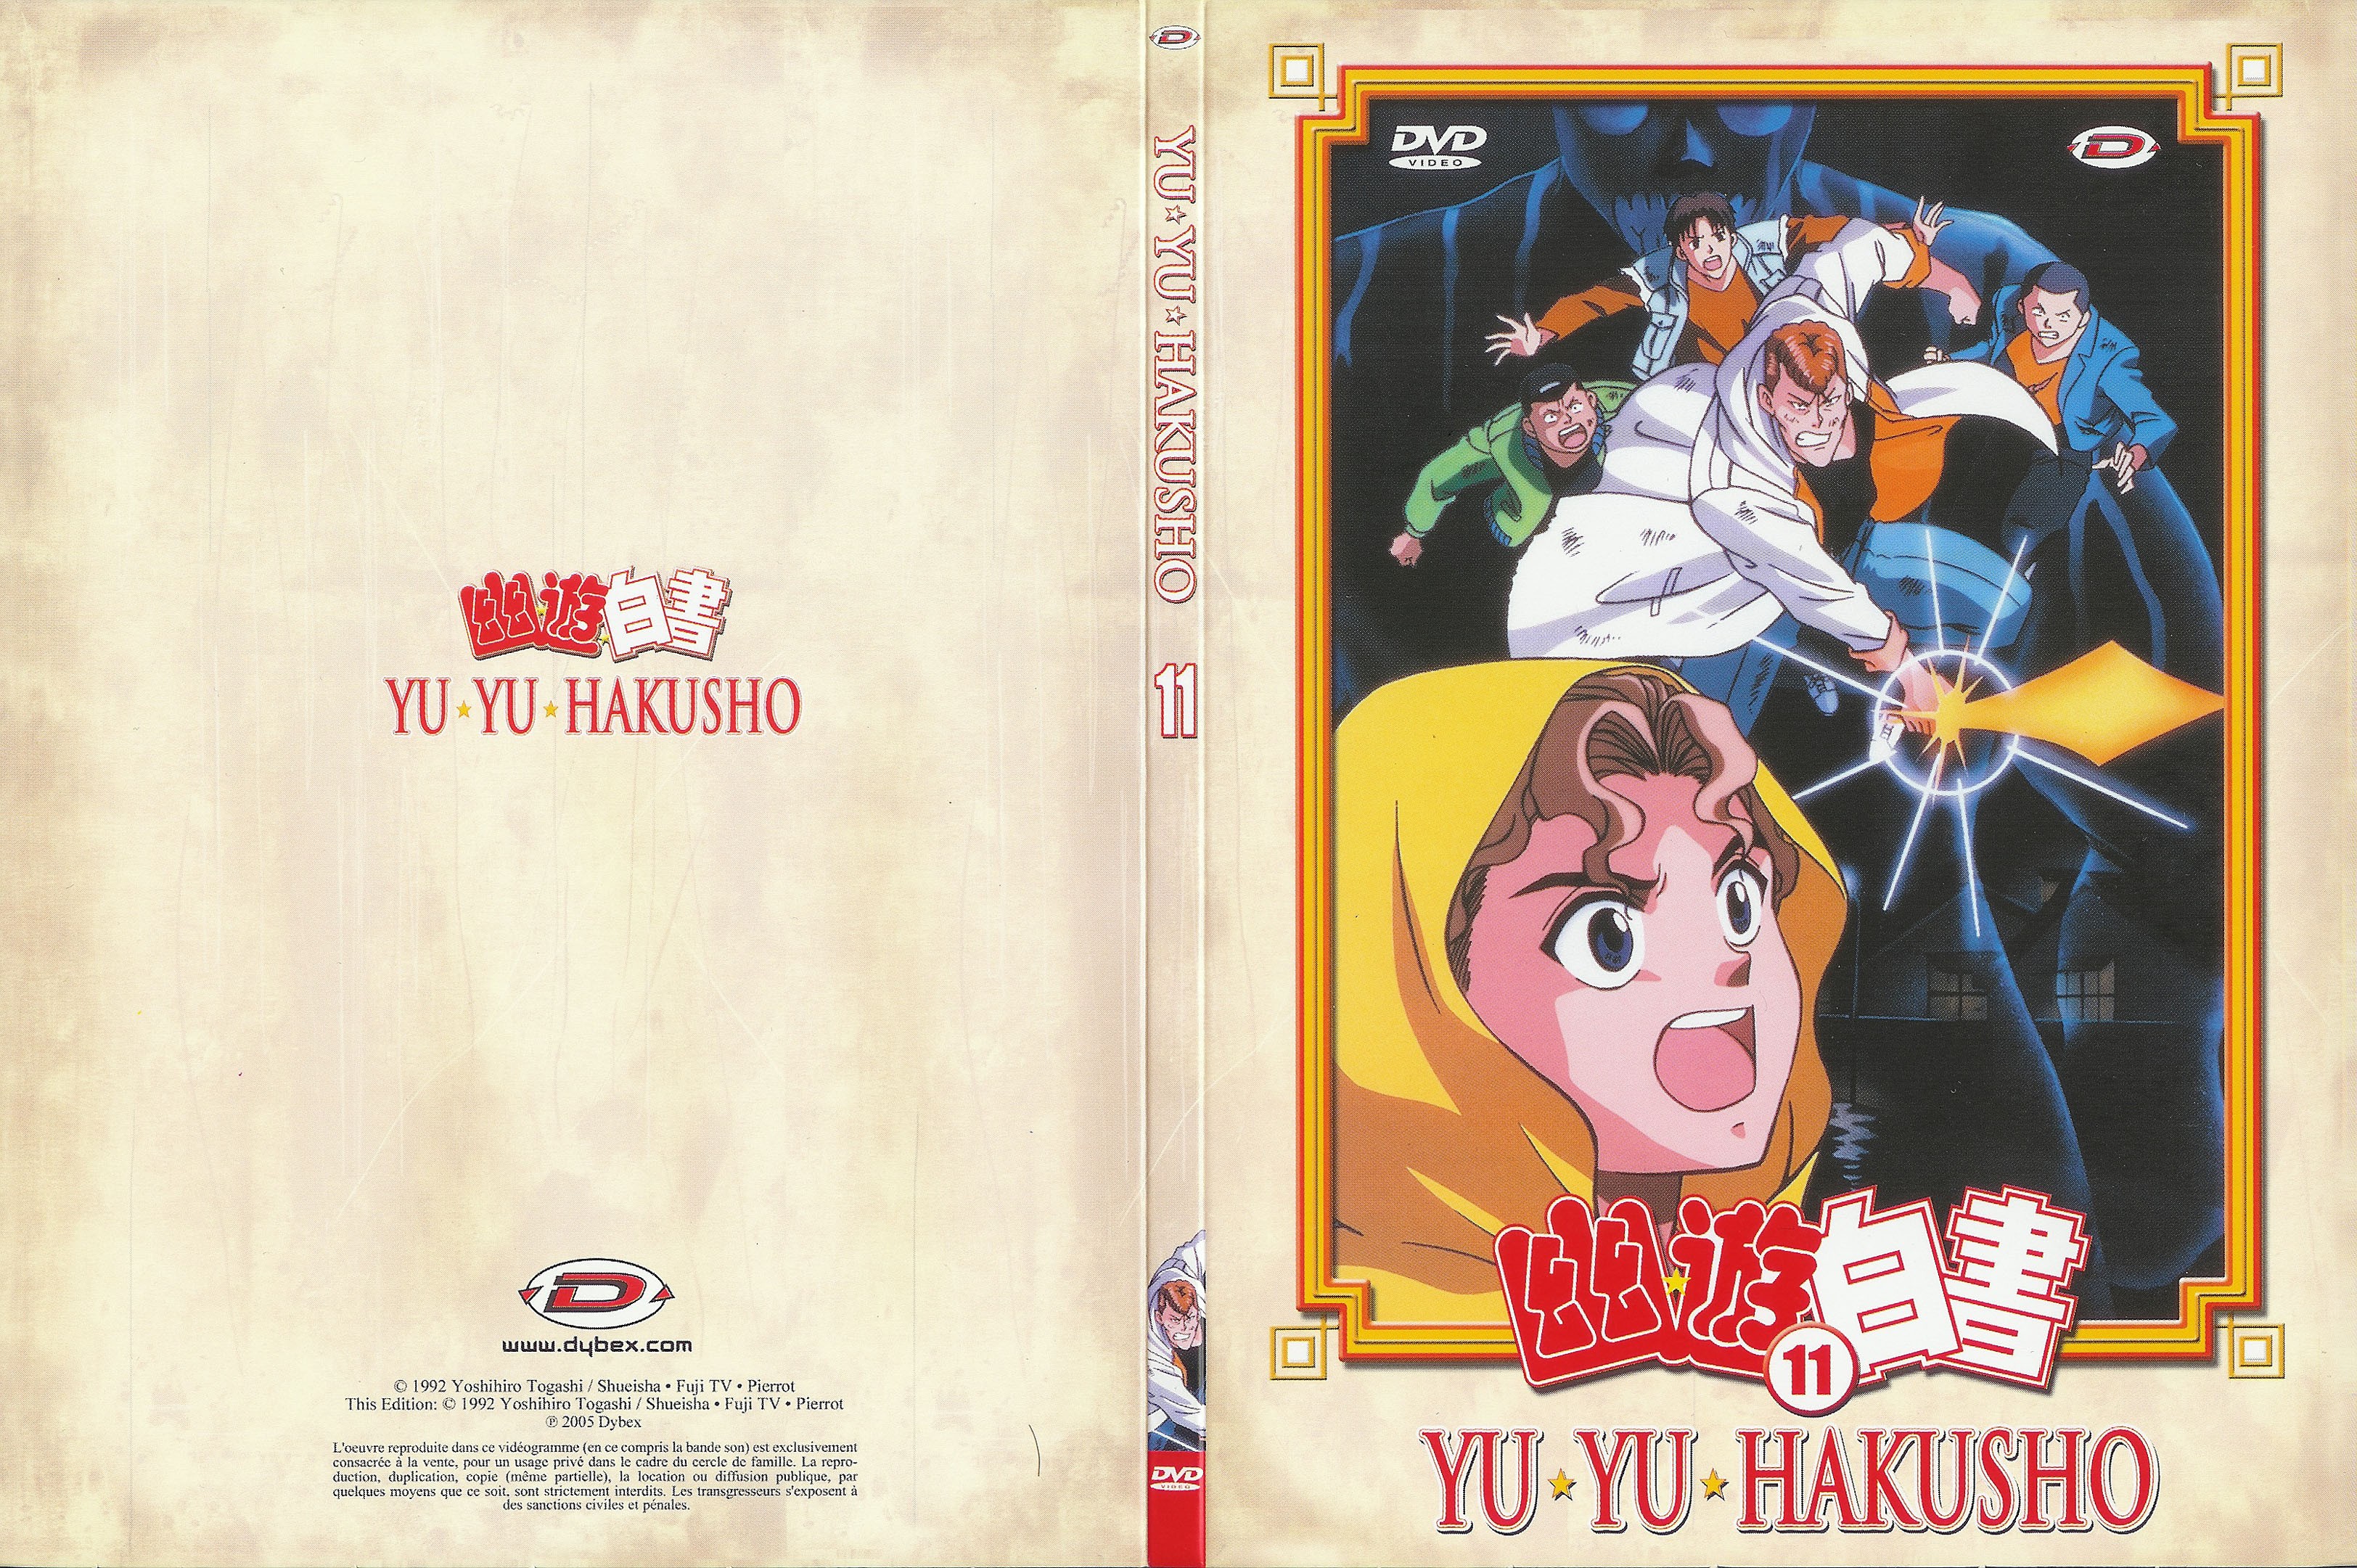 Jaquette DVD Yu yu hakusho vol 11